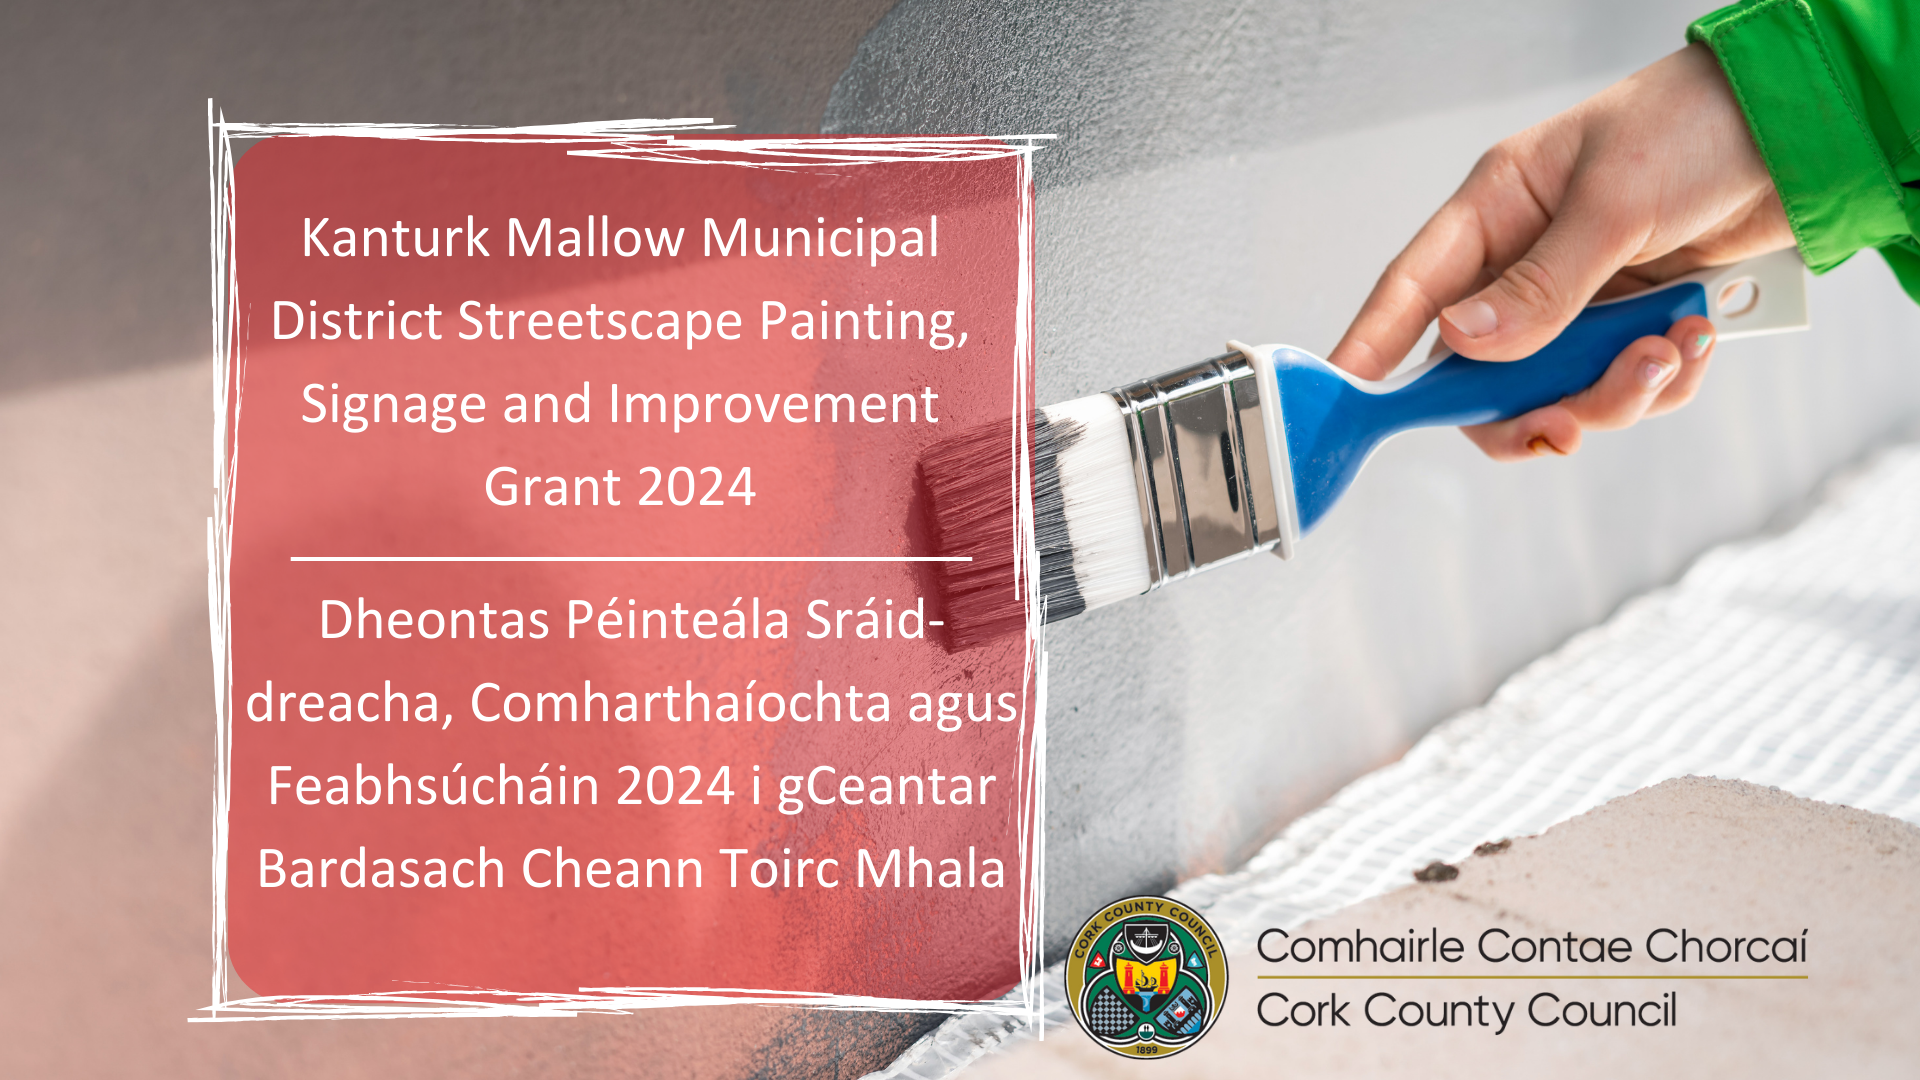 Kanturk Mallow Municipal District Streetscape Painting, Signage and Improvement Grant 2024